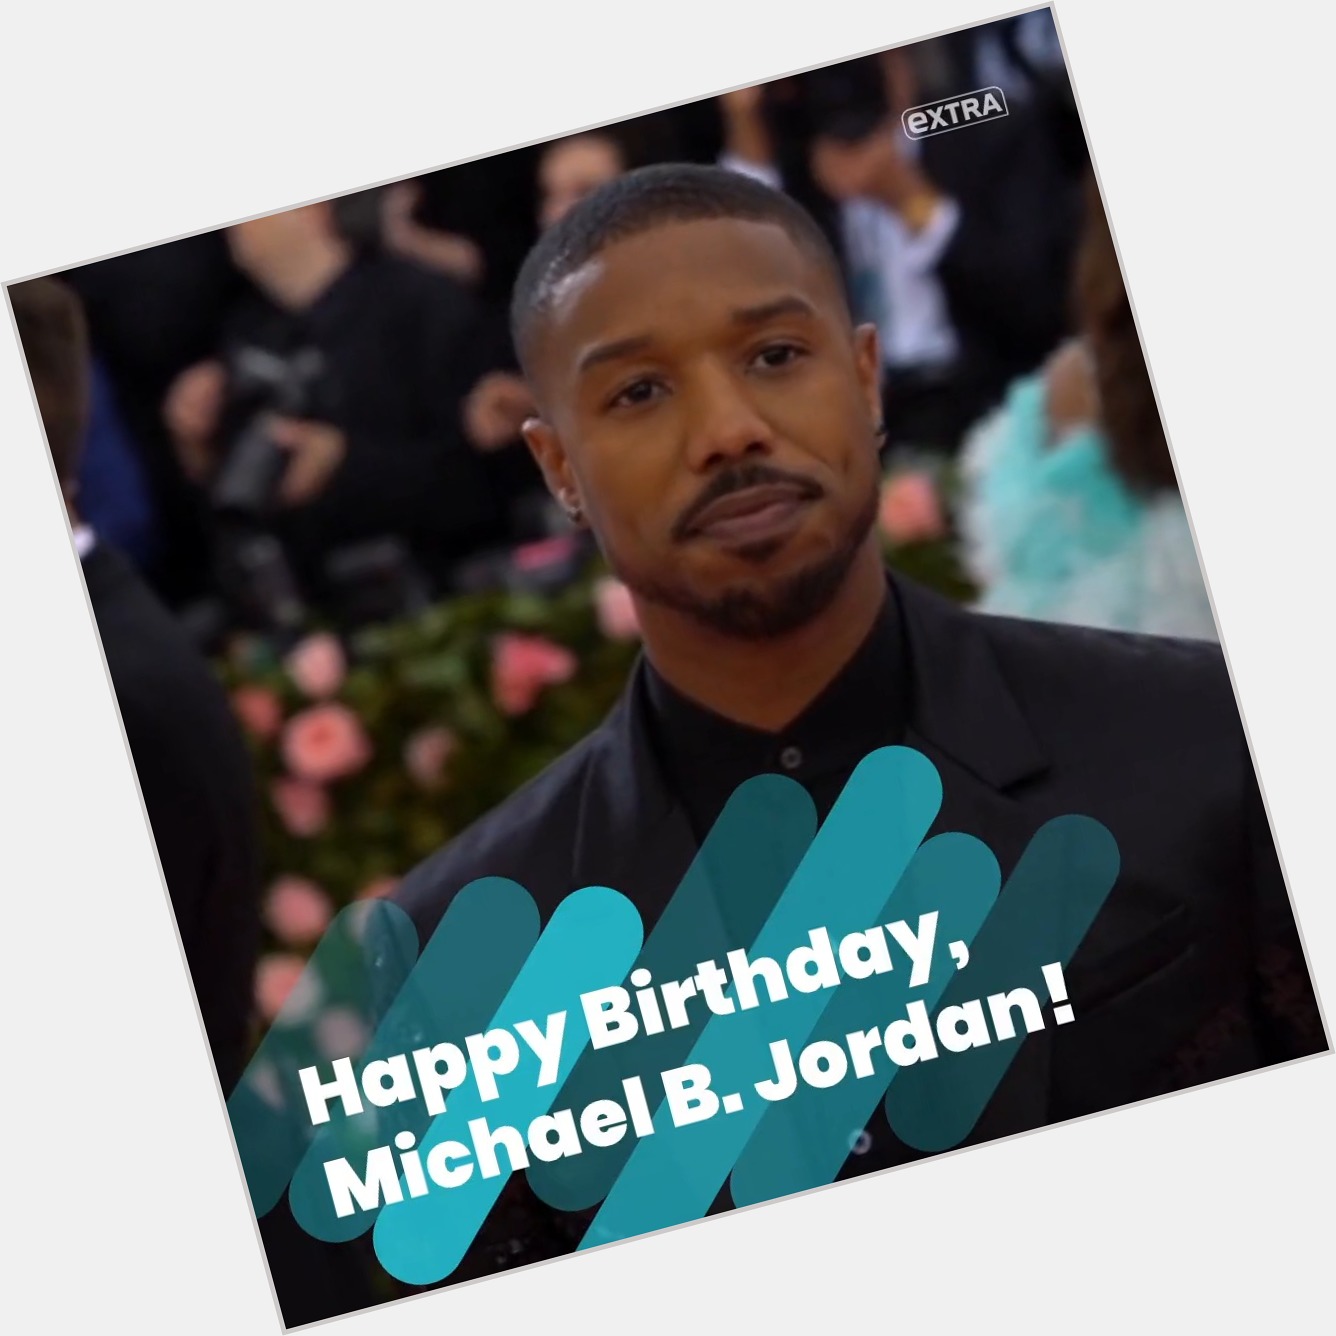 Happy birthday, Michael B. Jordan!  